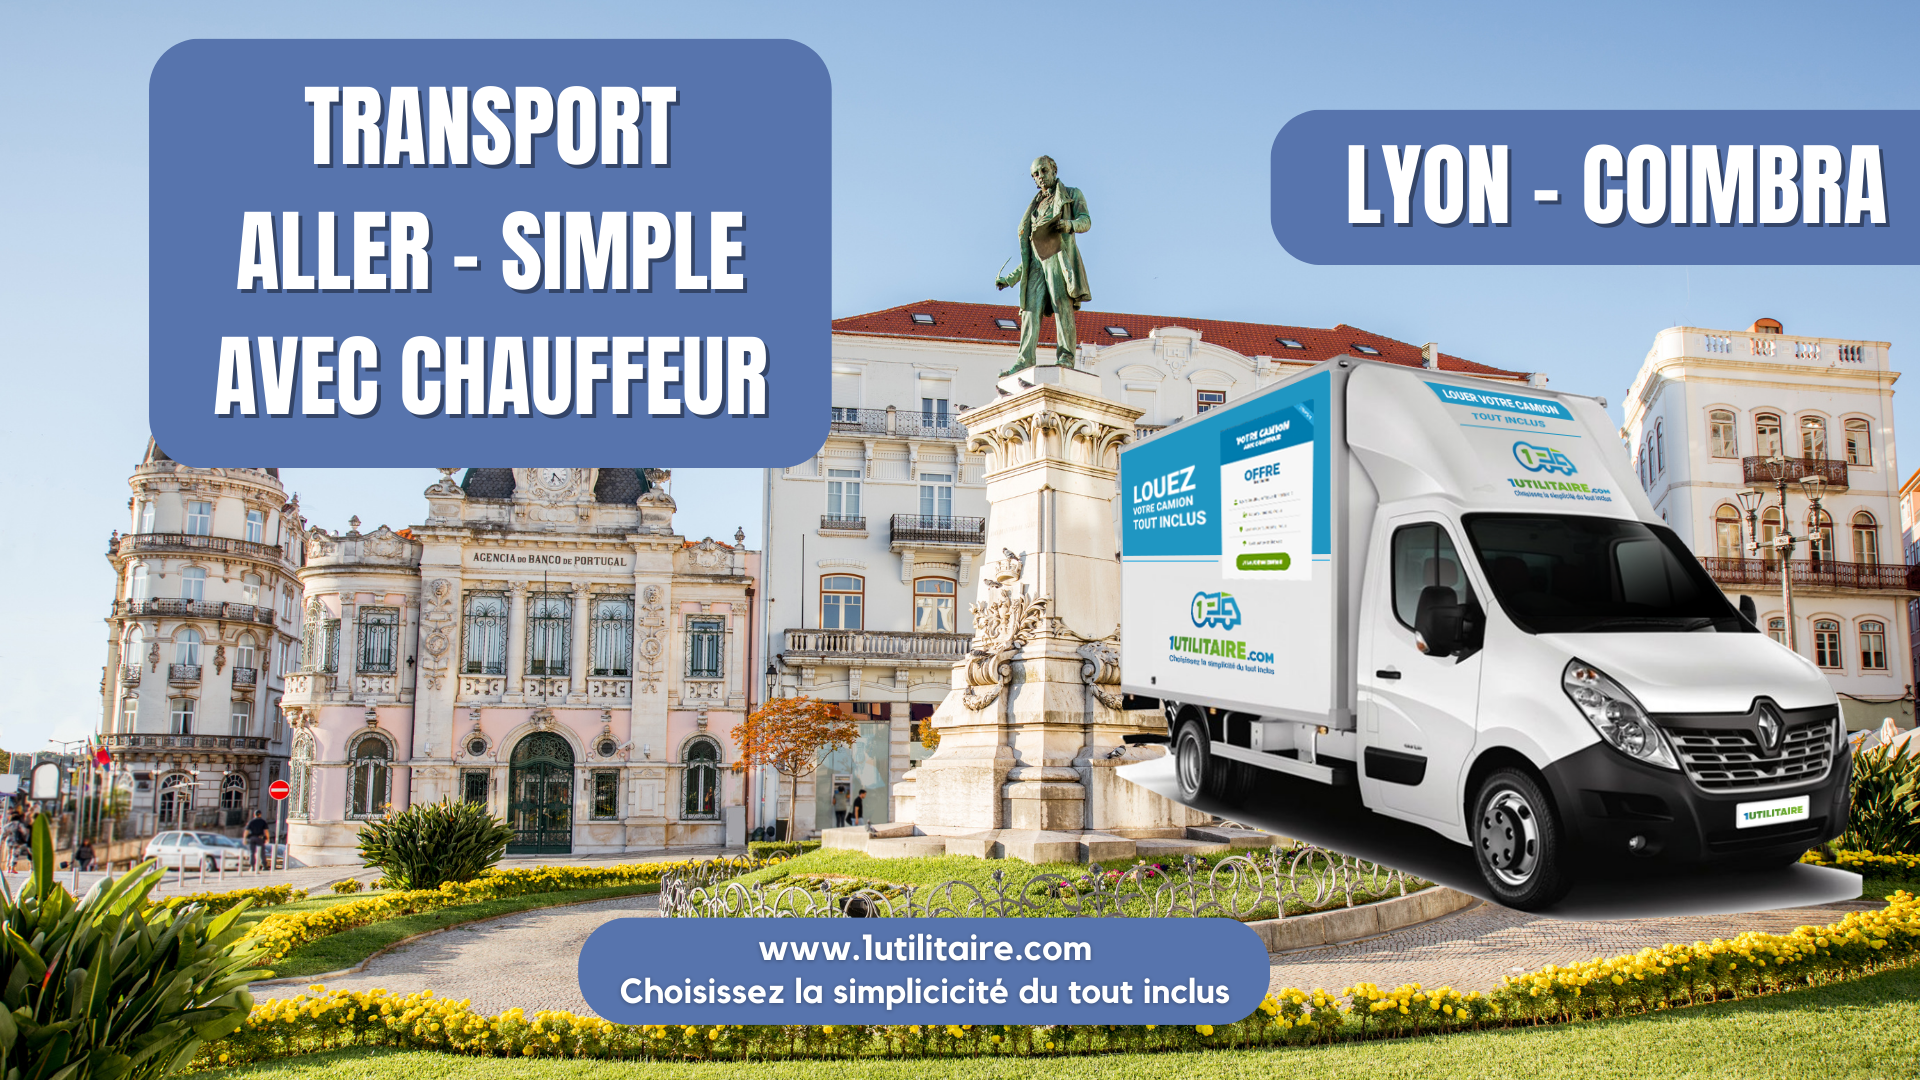 Transport aller - simple avec chauffeur Lyon - Coimbra